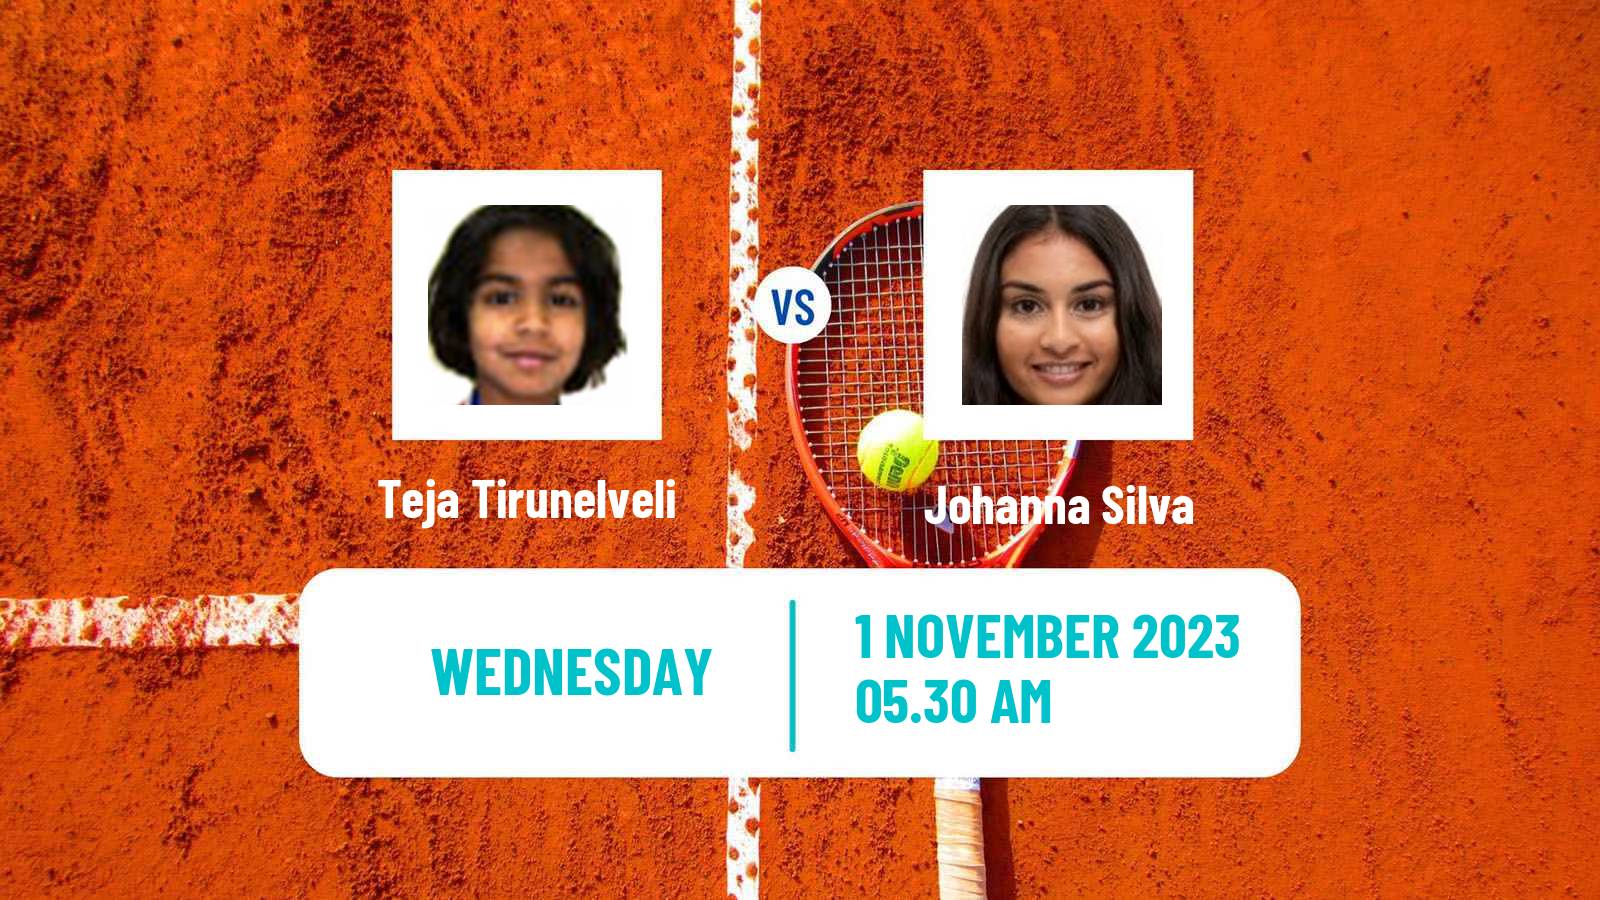 Tennis ITF W25 Monastir 4 Women Teja Tirunelveli - Johanna Silva